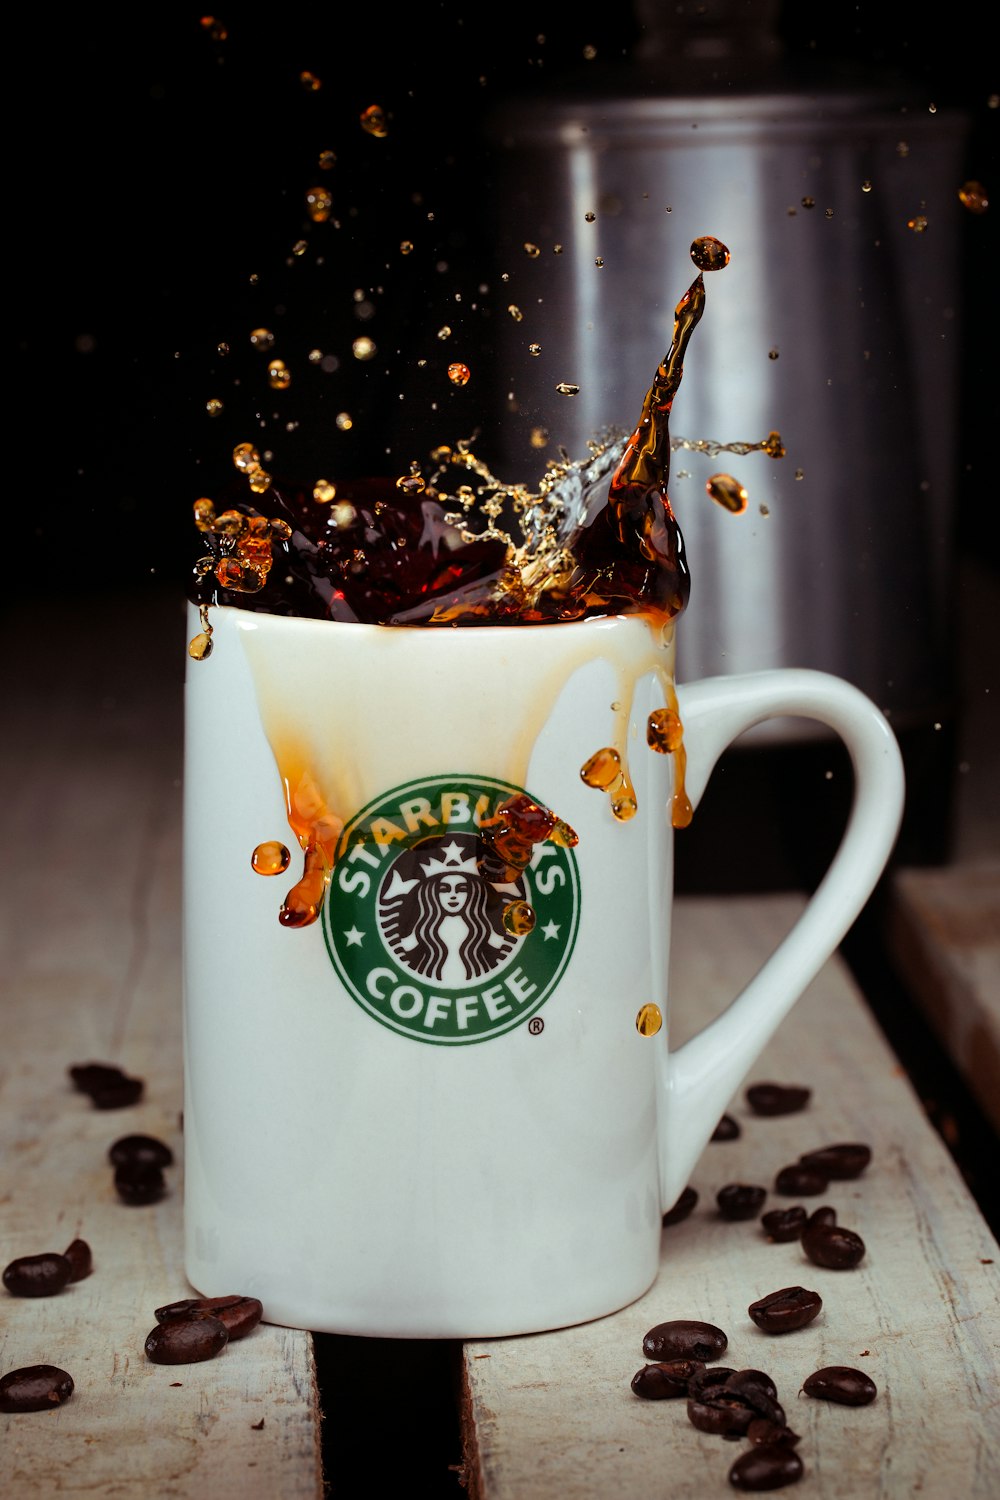 Starbucks mug filled with coffee